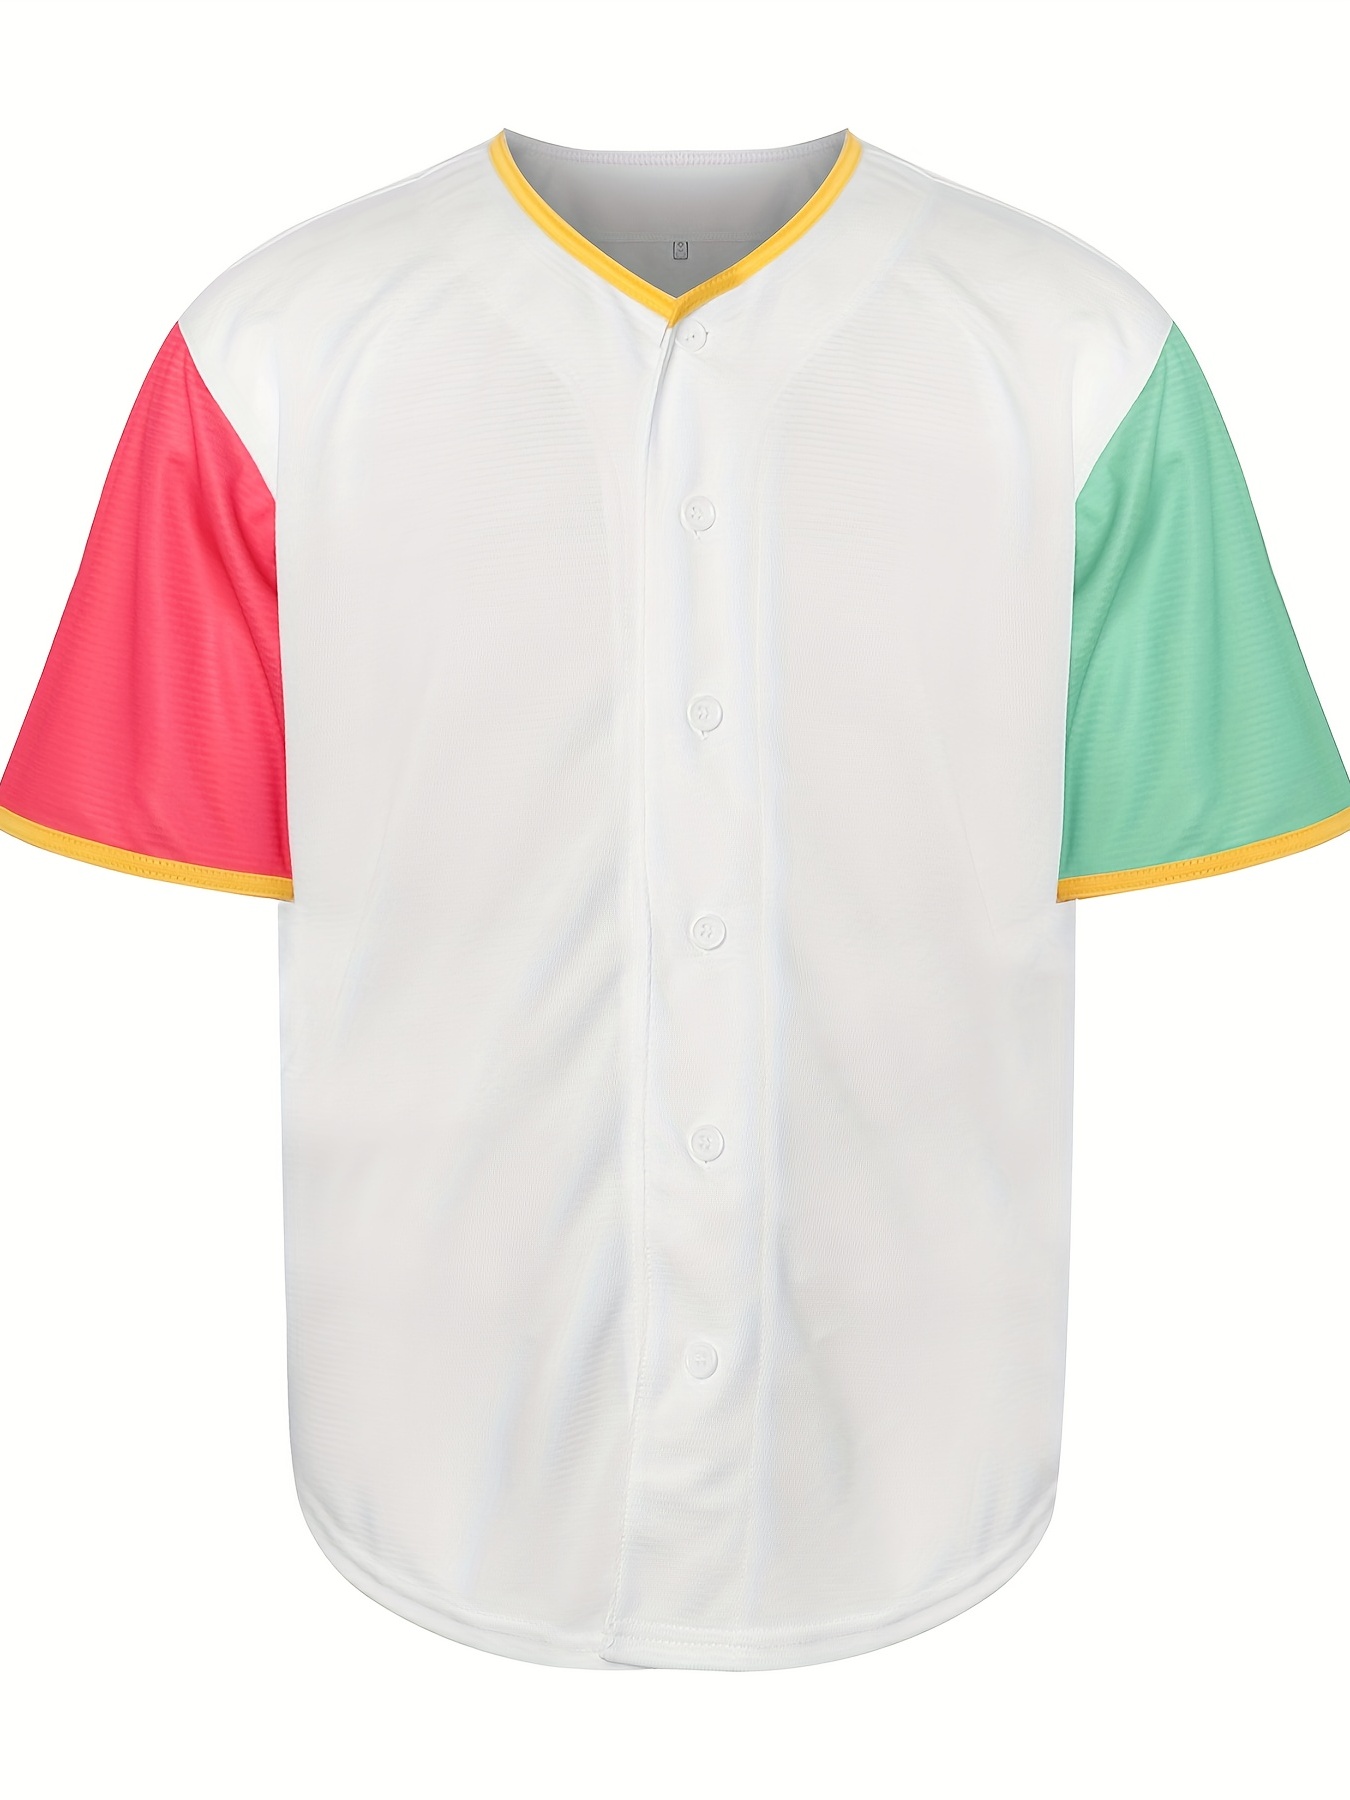 blank baseball jersey coloring